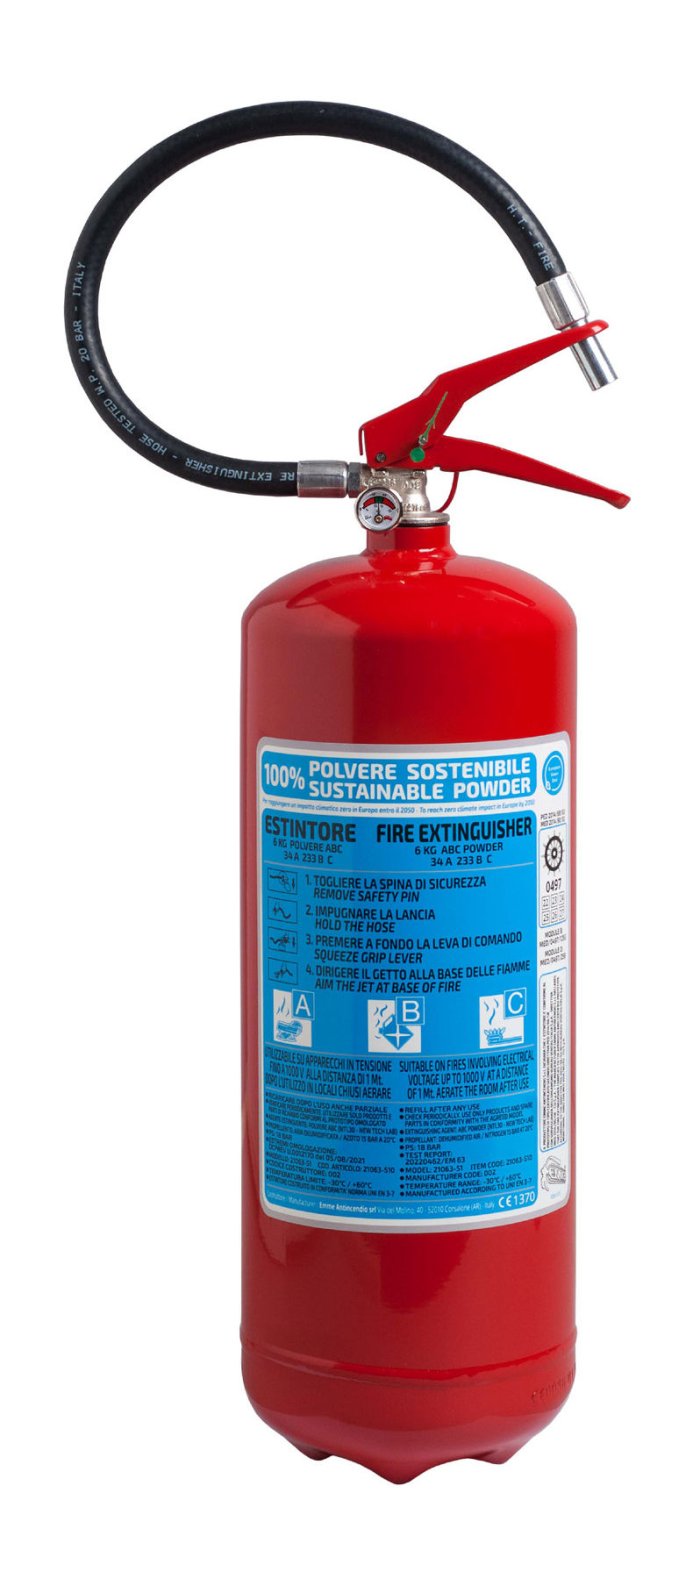 6 Kg powder fire extinguisher - Model 21063-550 - 34A 233BC - UNI EN 3-7 - 100% Sustainable Powder